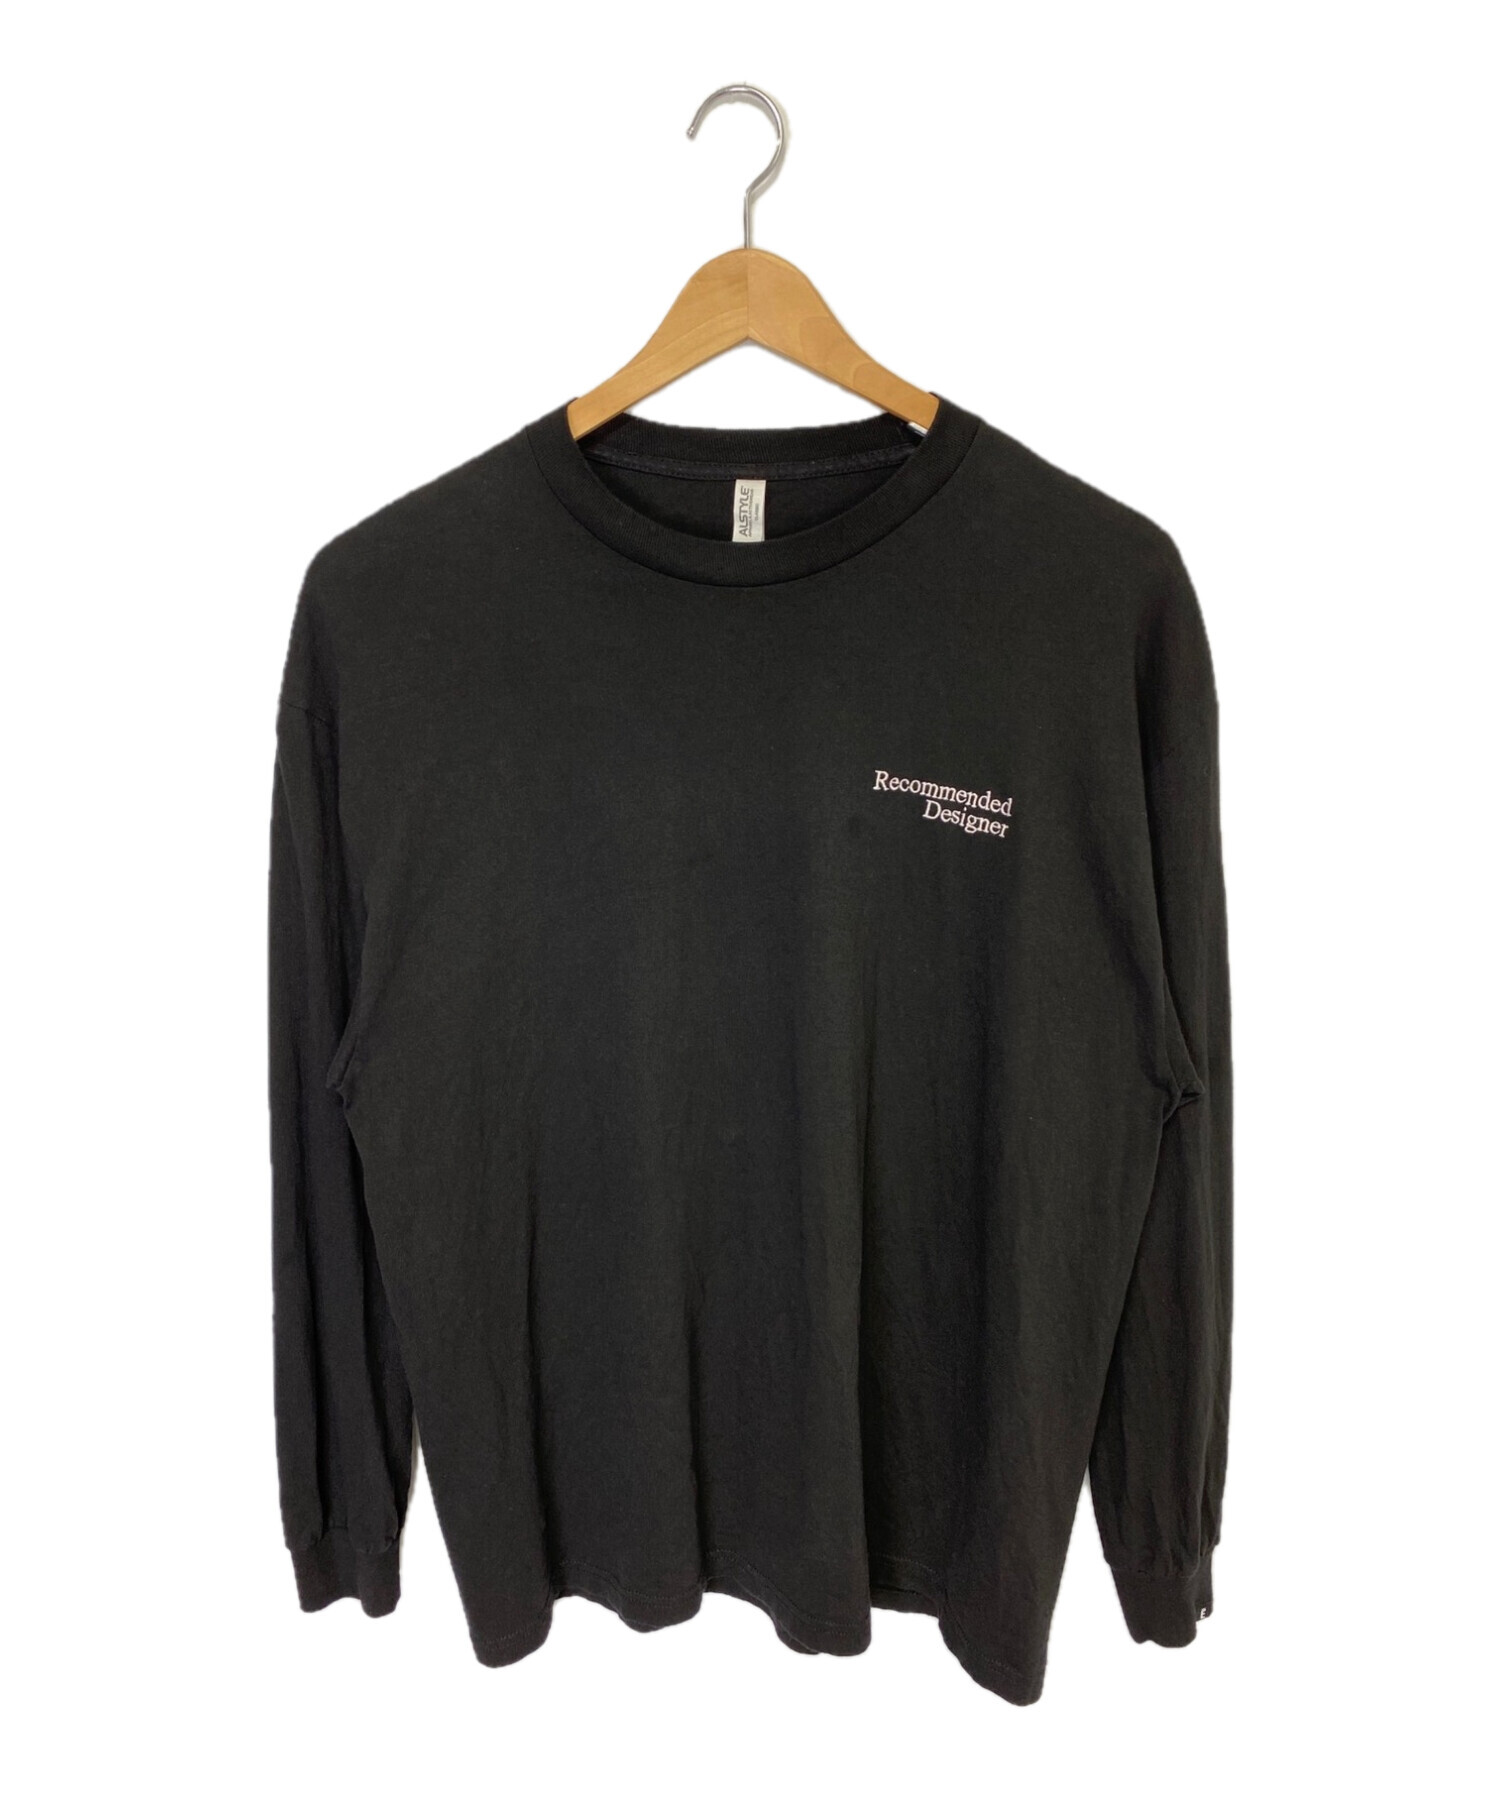 ENNOY (エンノイ) Recommended Designer 長袖Tシャツ ブラック サイズ:XL